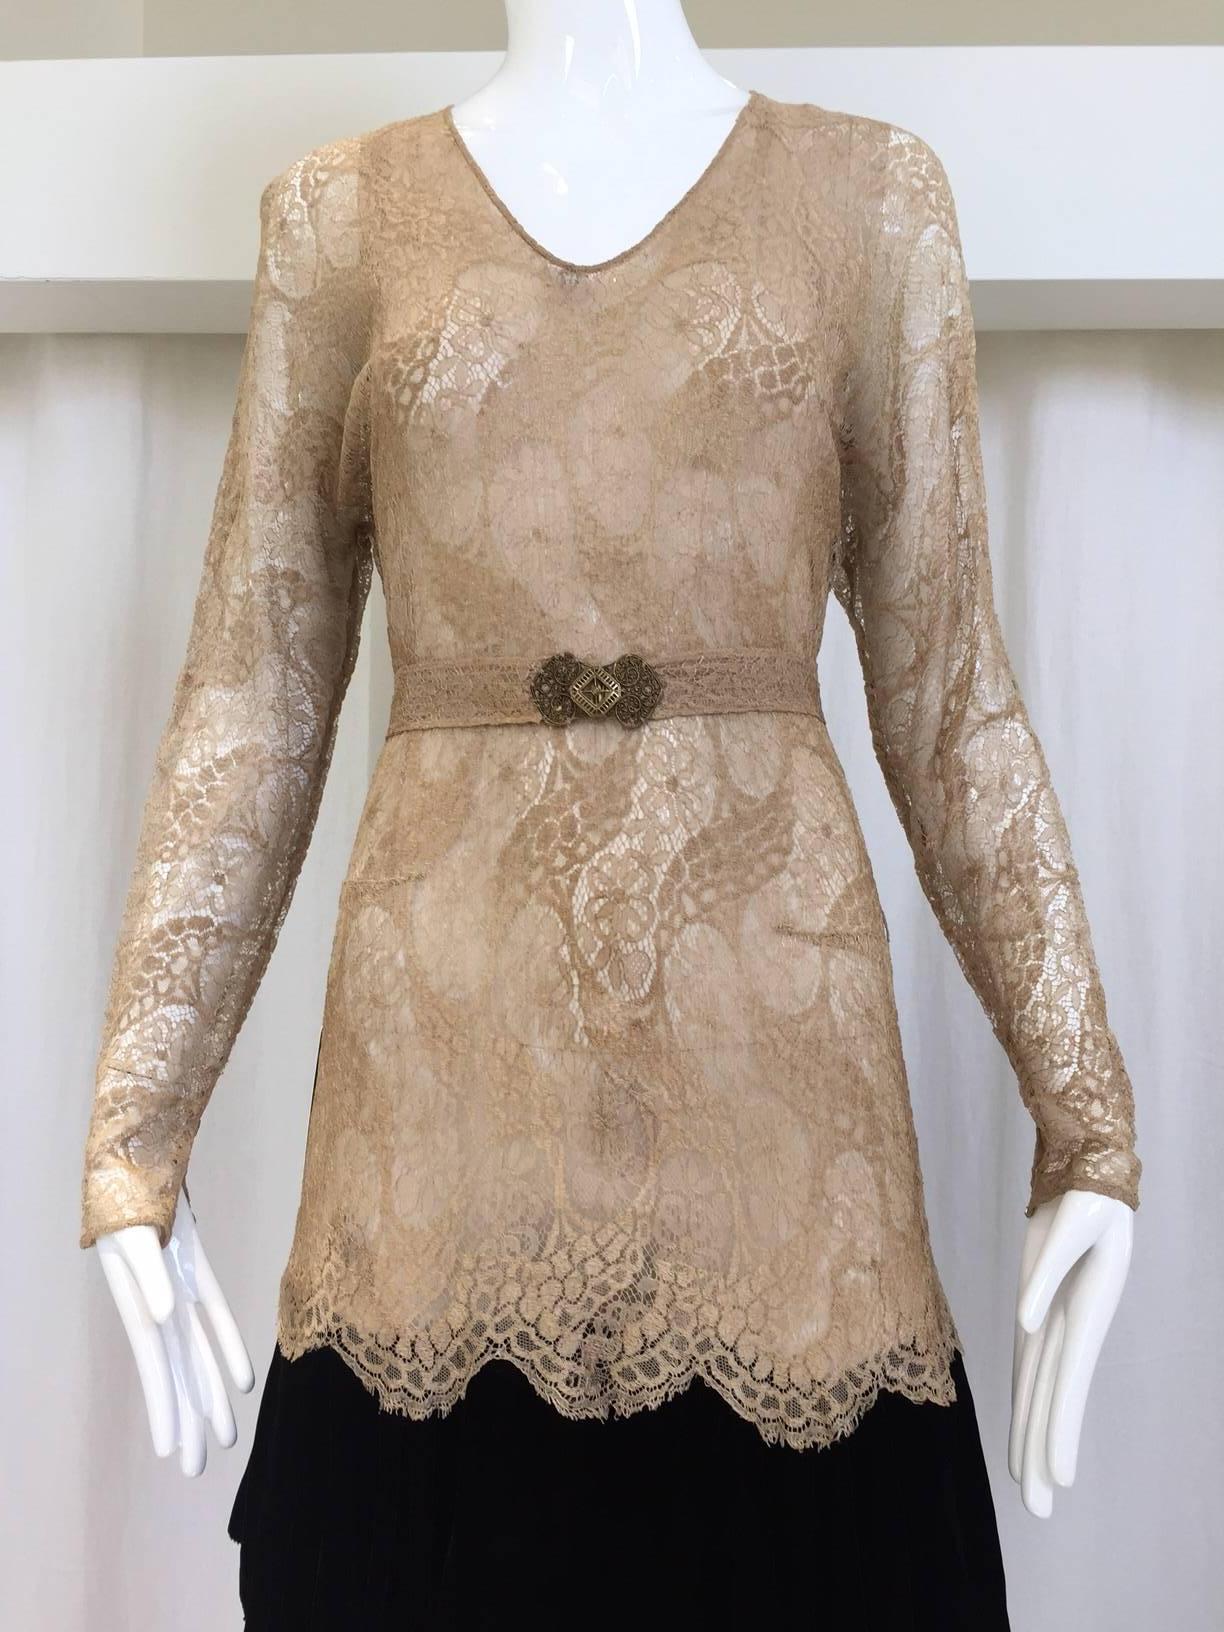 1920s mocha lace dress with velvet trim and belt. 
Bust: 32